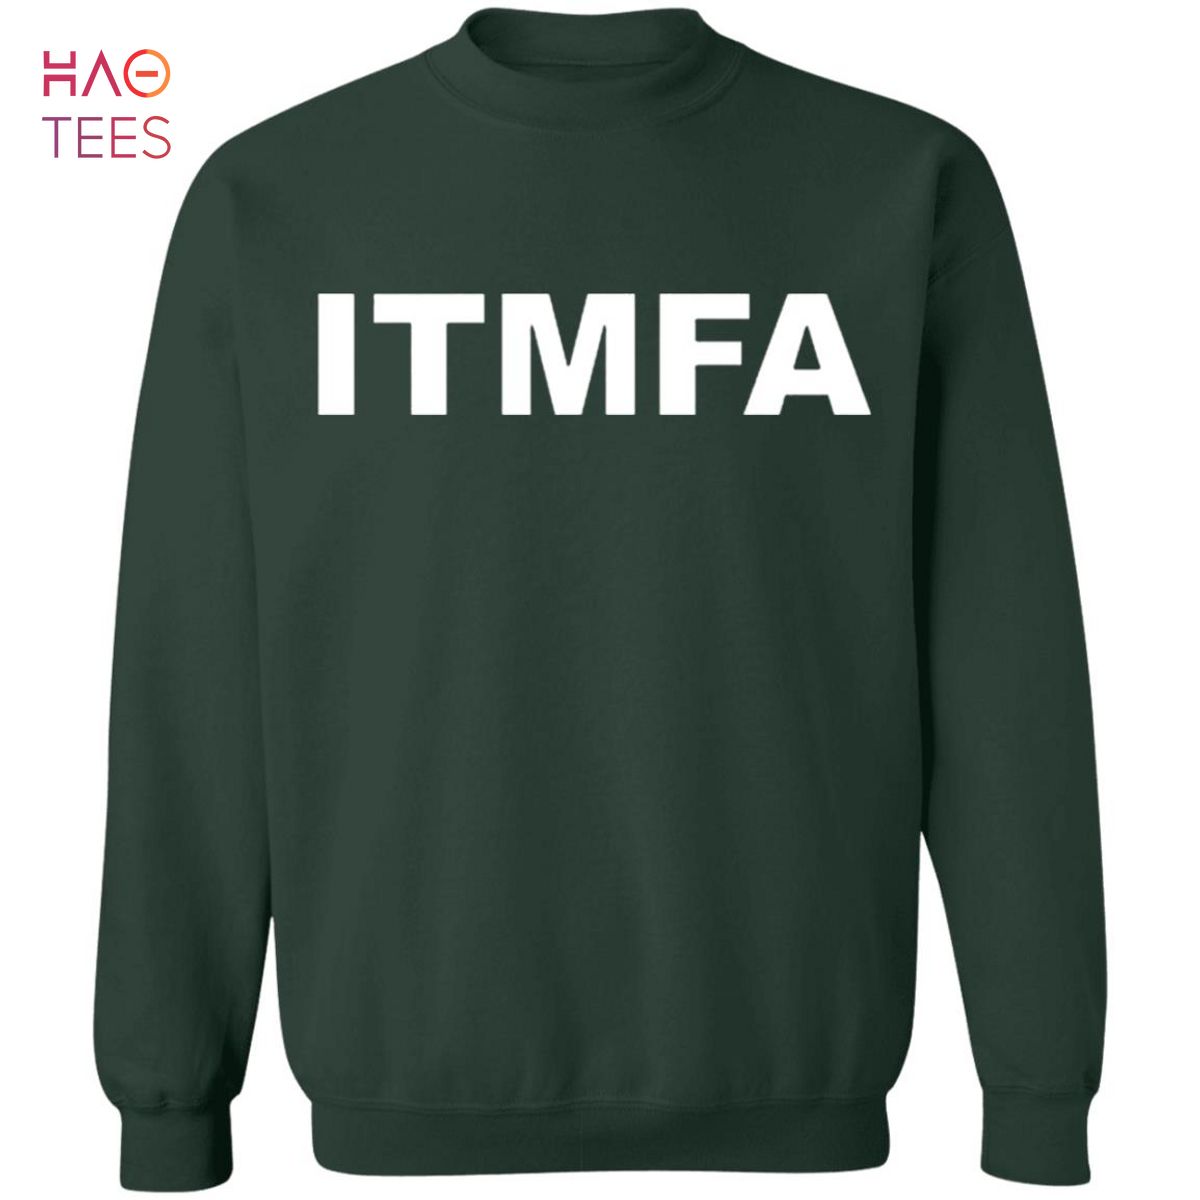 [NEW] Itmfa Sweater